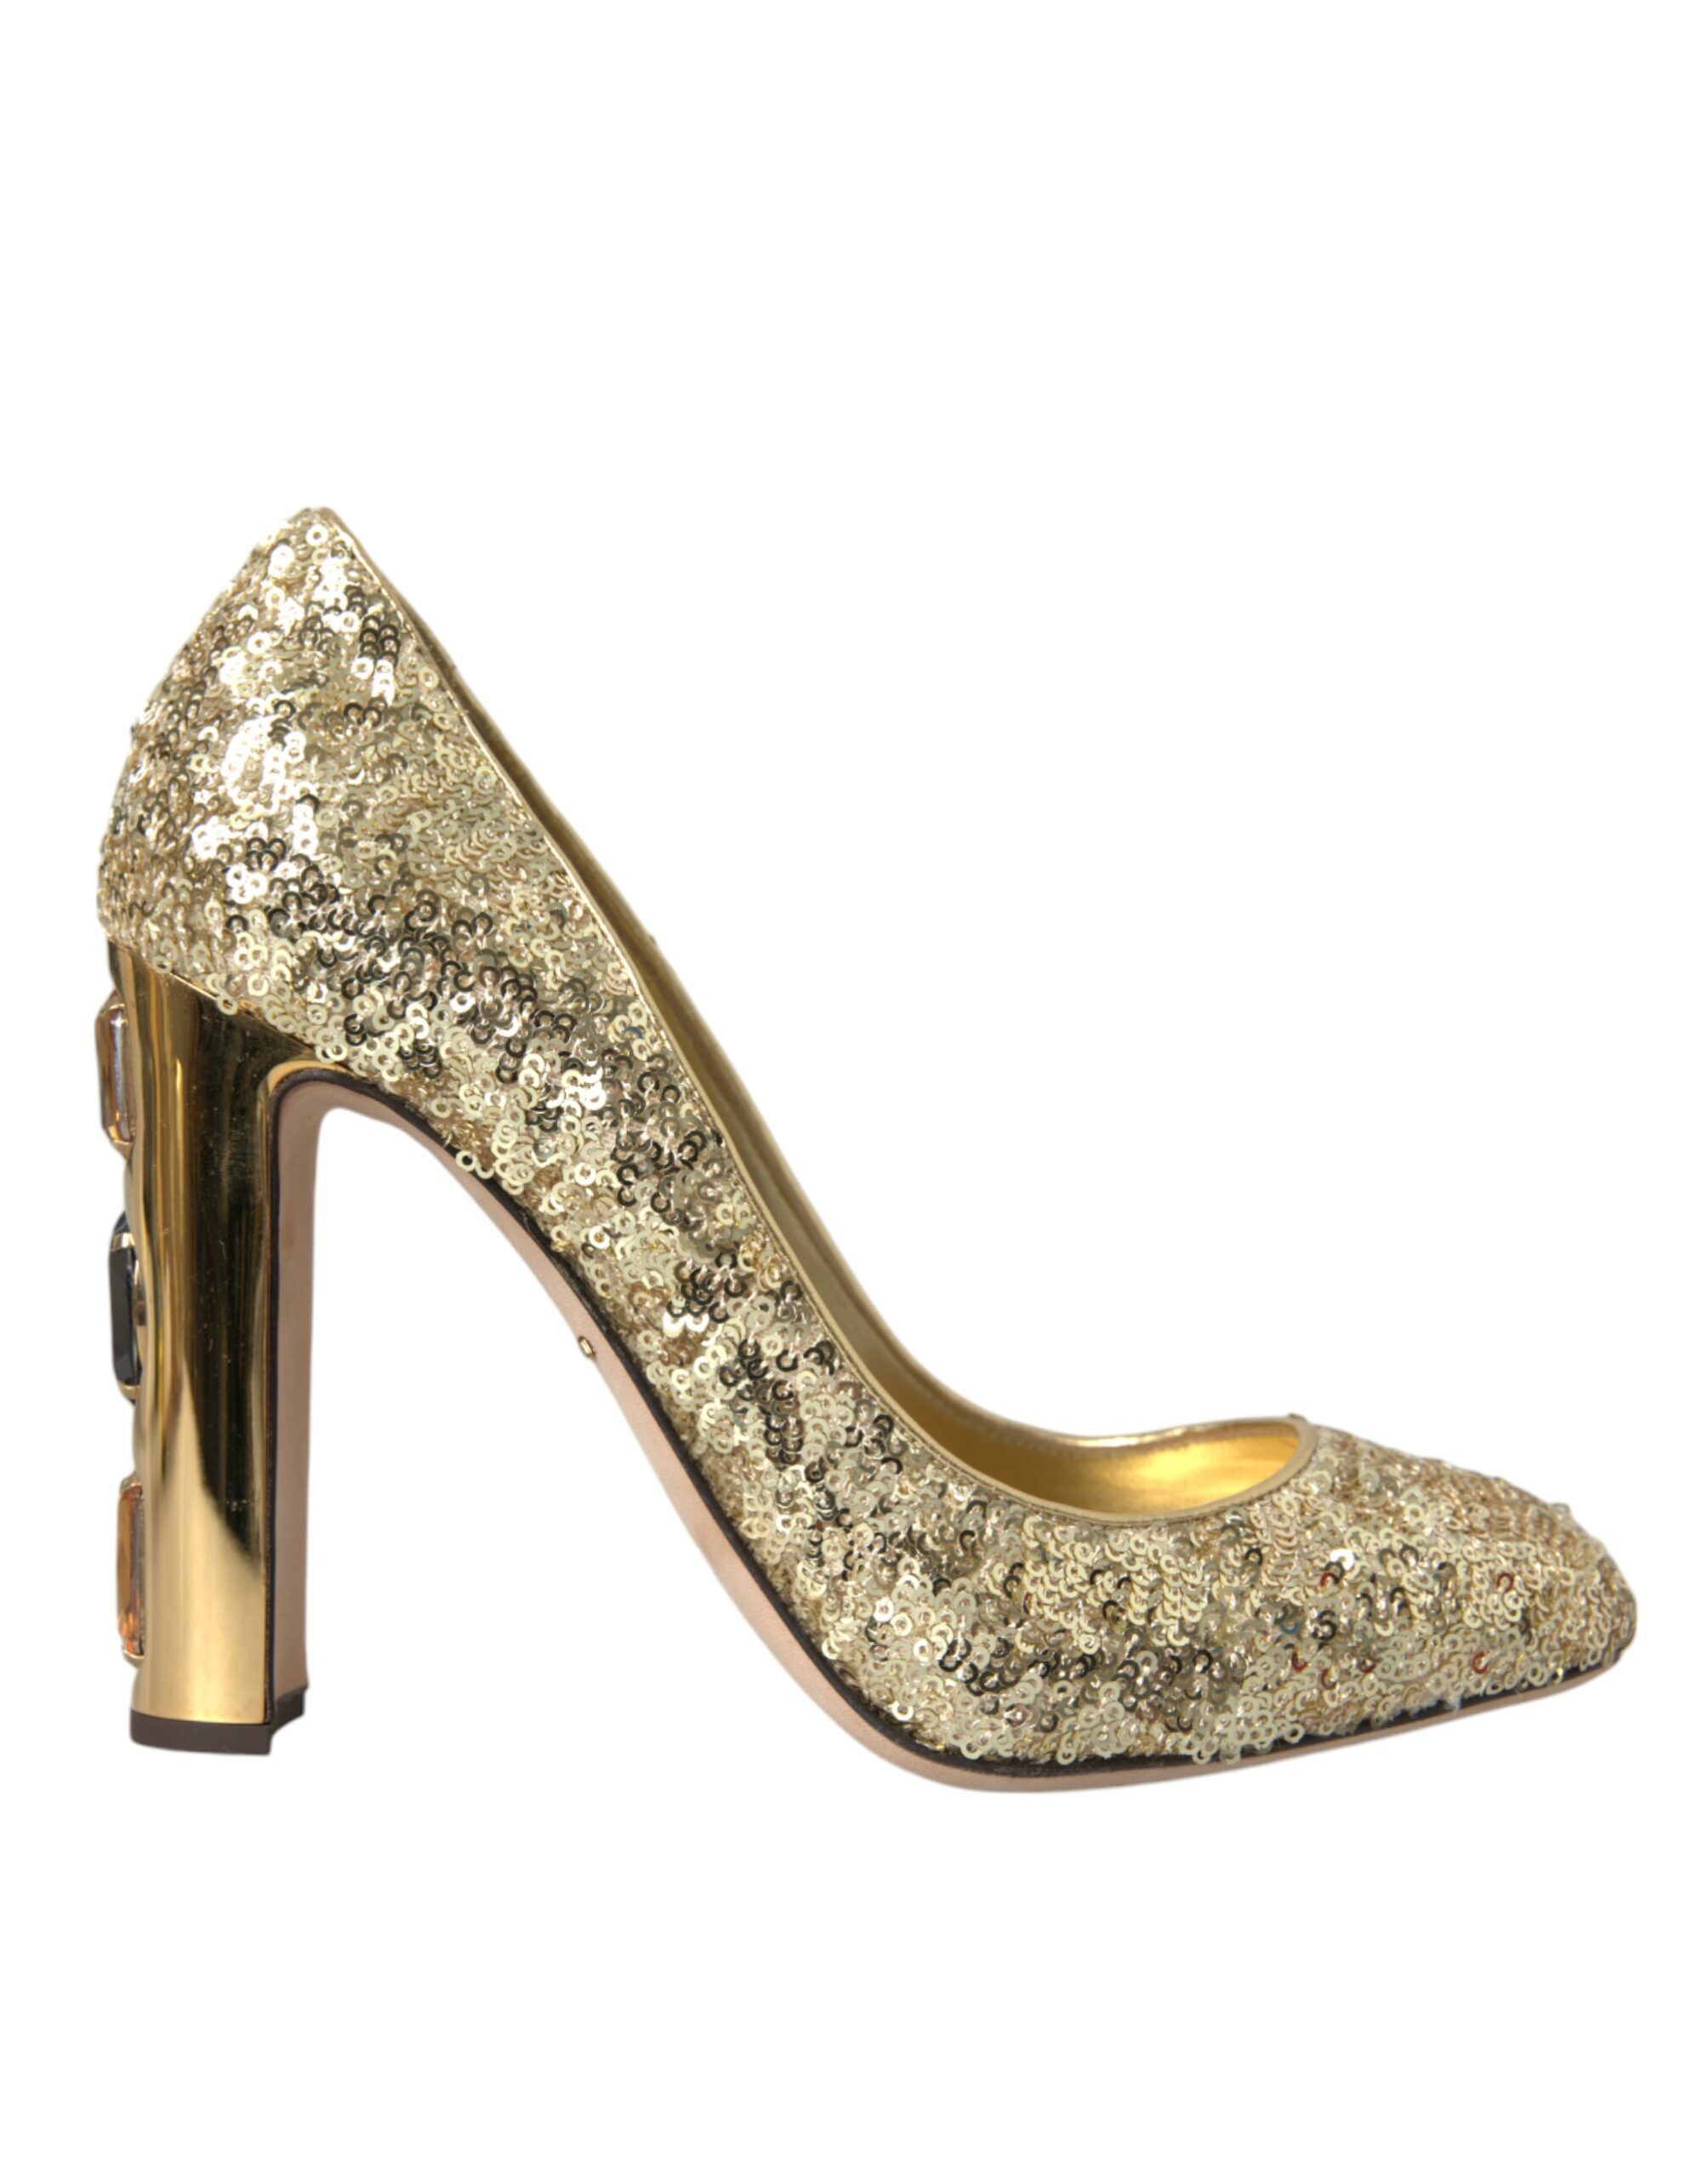 Dolce & Gabbana Gold Sequin Crystal Heels Pumps Shoes EU39/US8.5 Gold